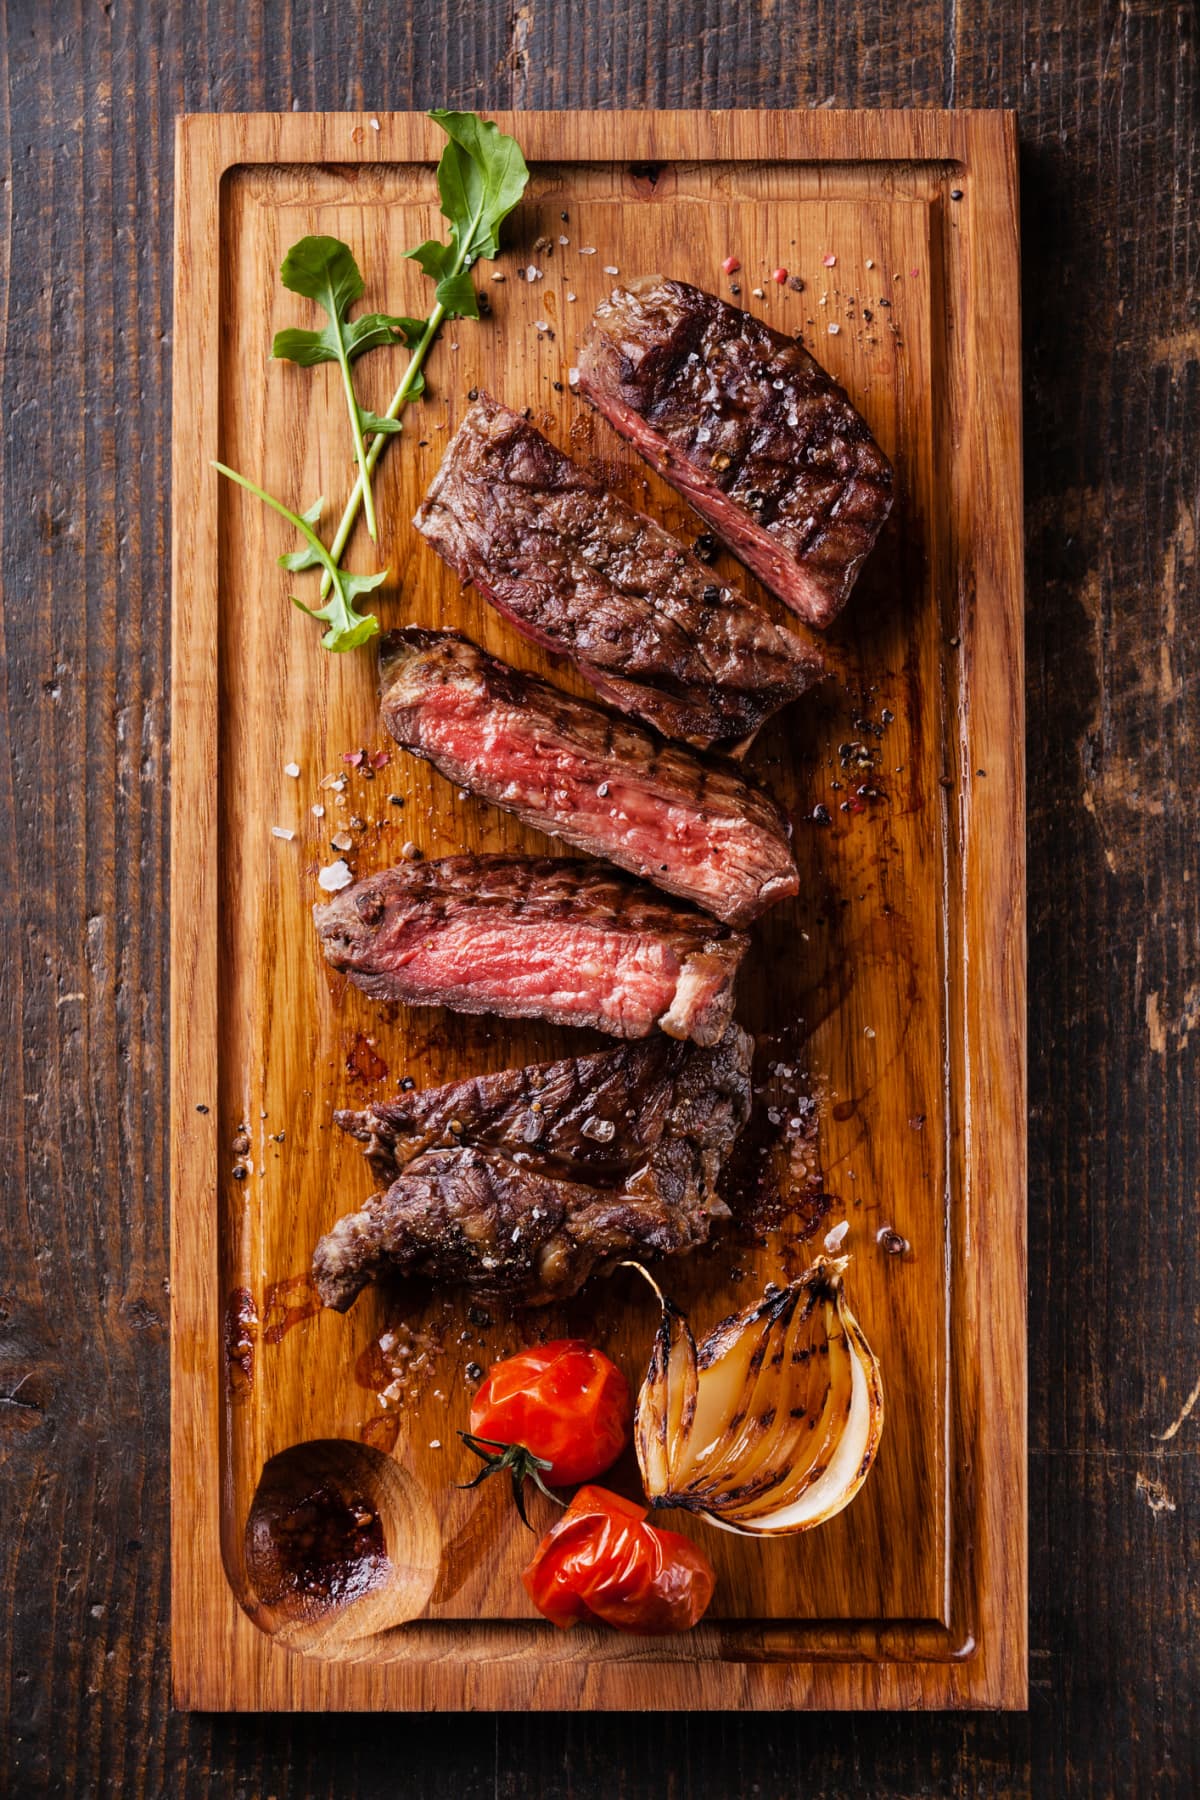 A piece of cut up steak on a cutting board